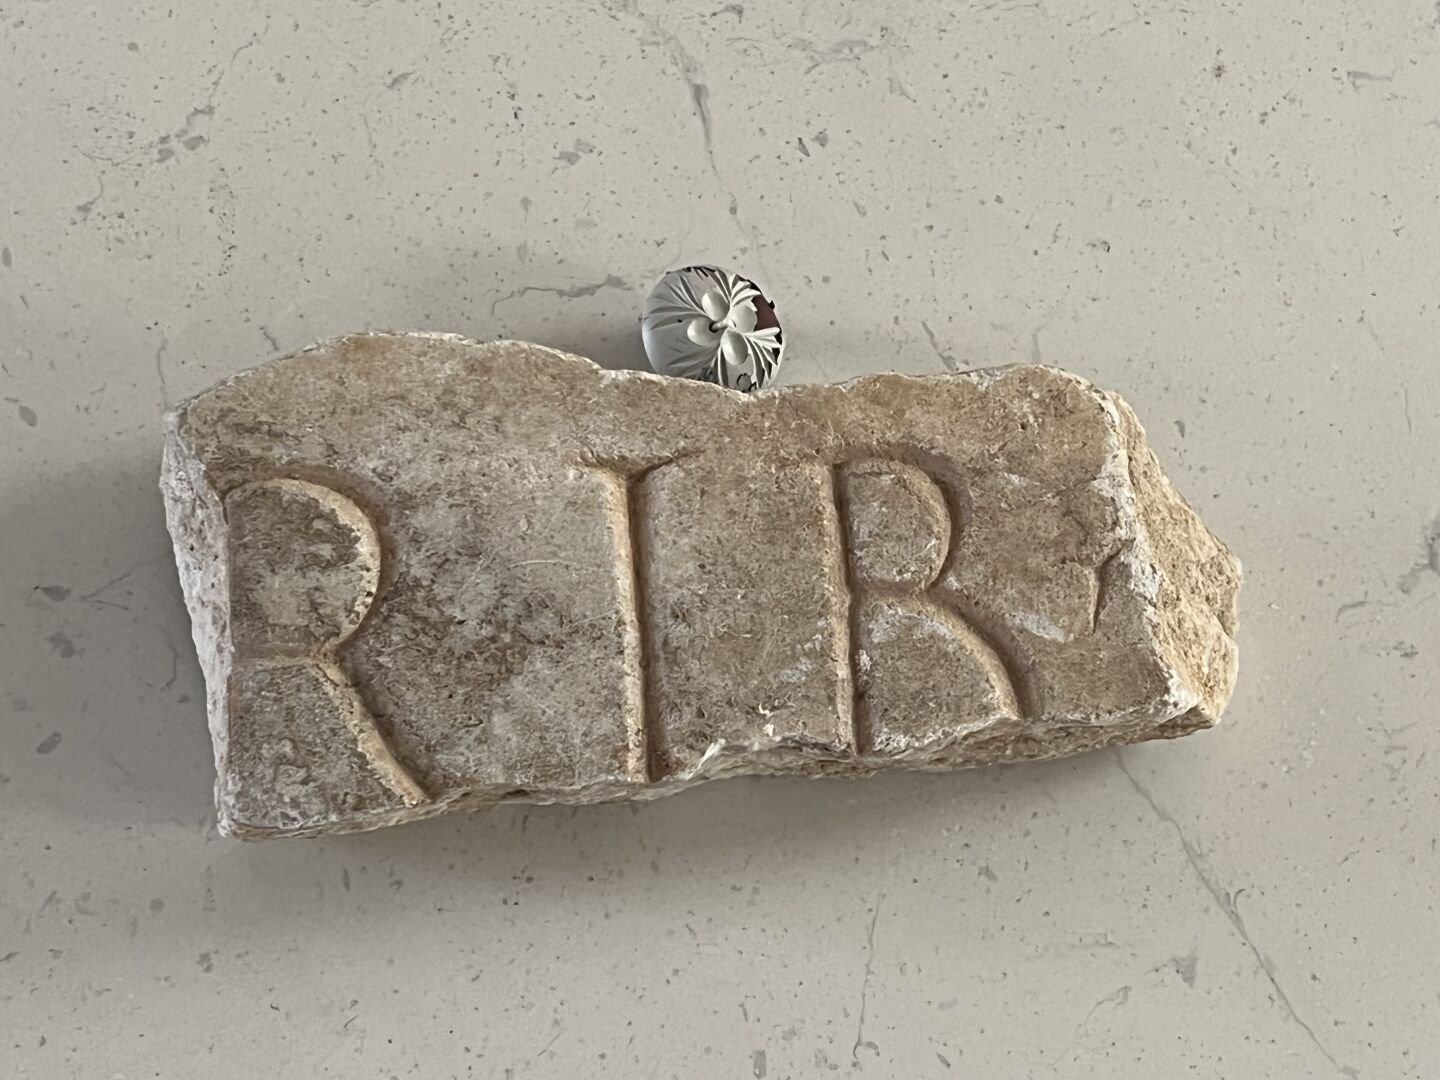 Null 碎片上刻有 "RIB "字样。大理石。 

罗马时期。 

9 x 19厘米。